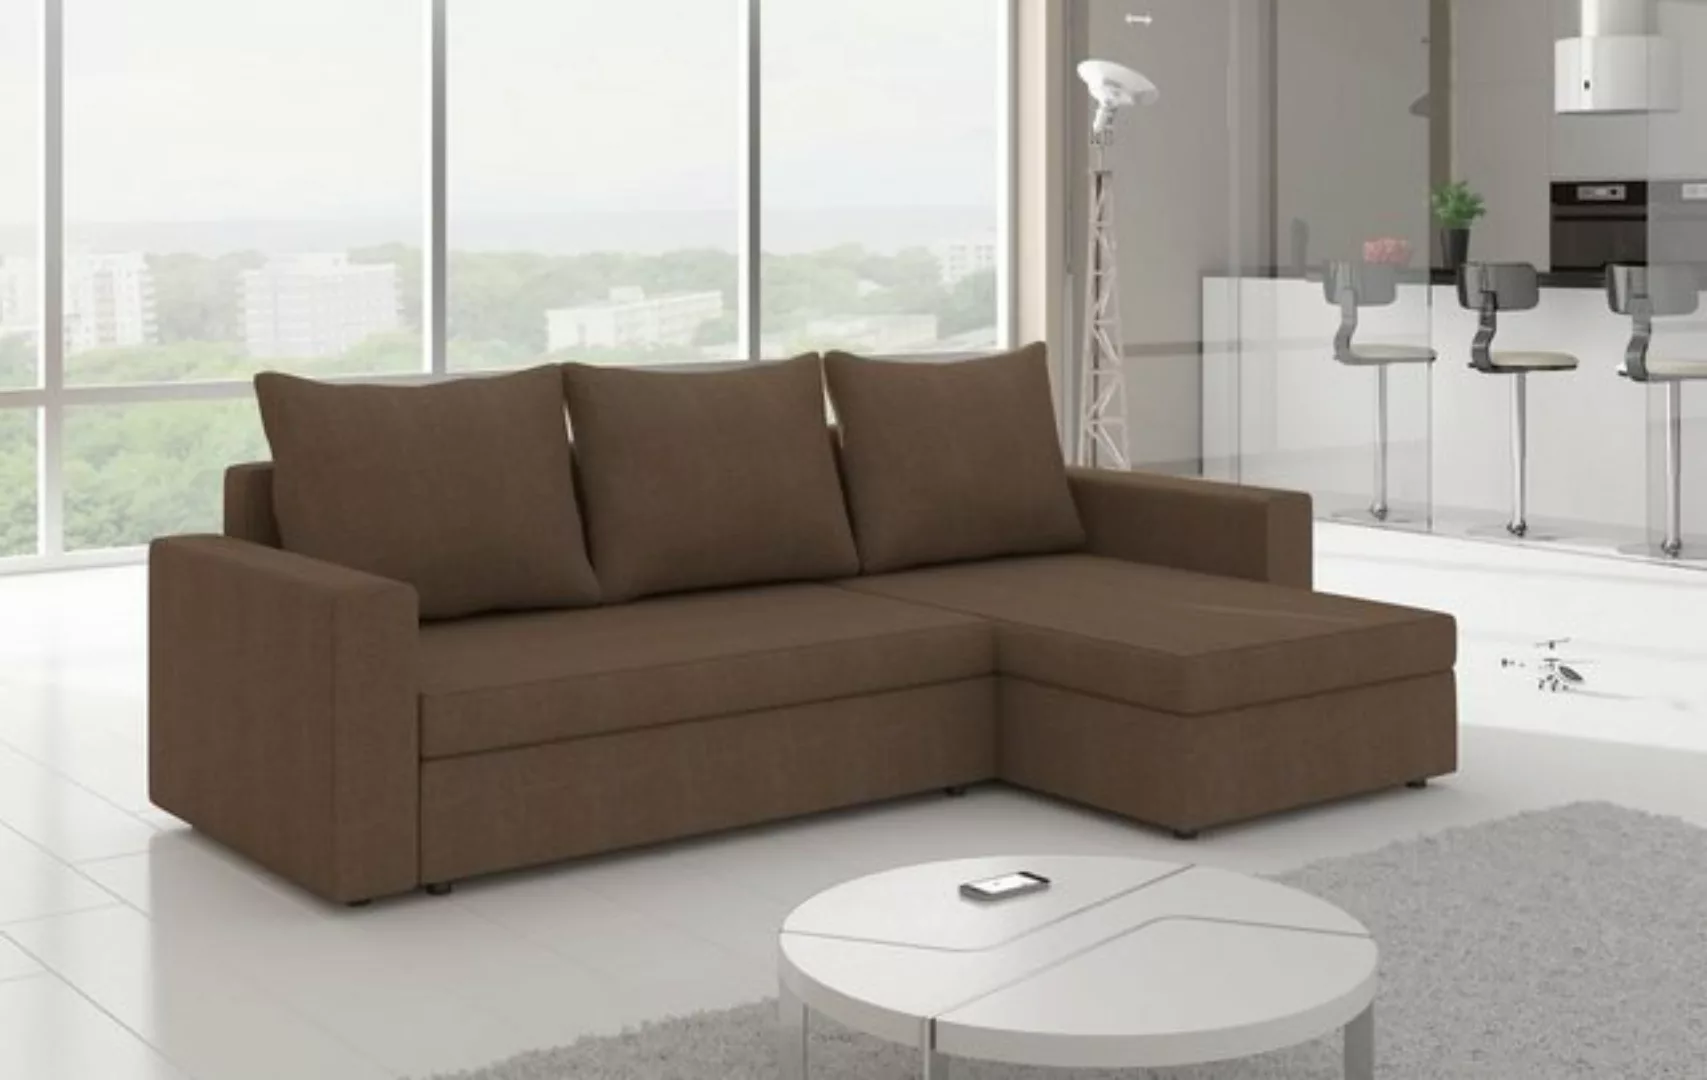 JVmoebel Ecksofa, Design Ecksofa Schlafsofa Bettfunktion Couch Leder Polste günstig online kaufen